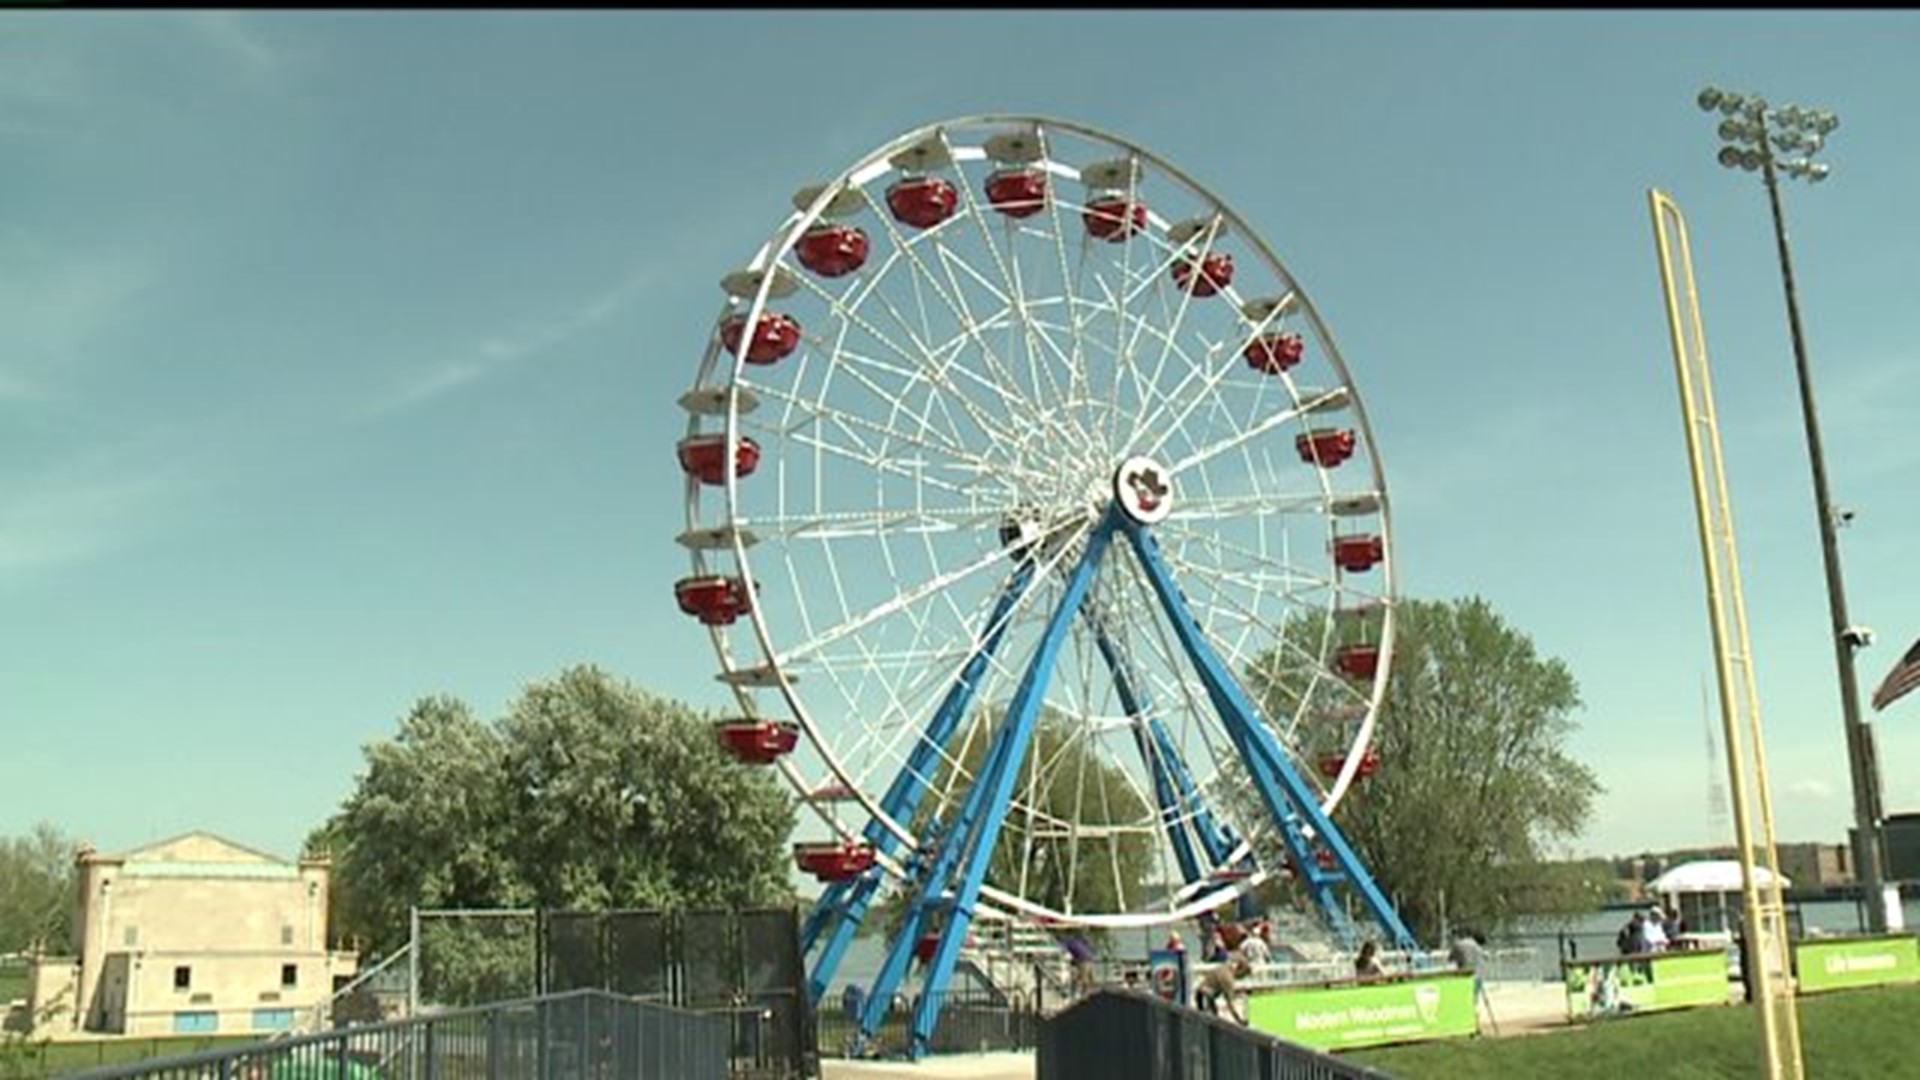 Ferris wheel has first inspection ride